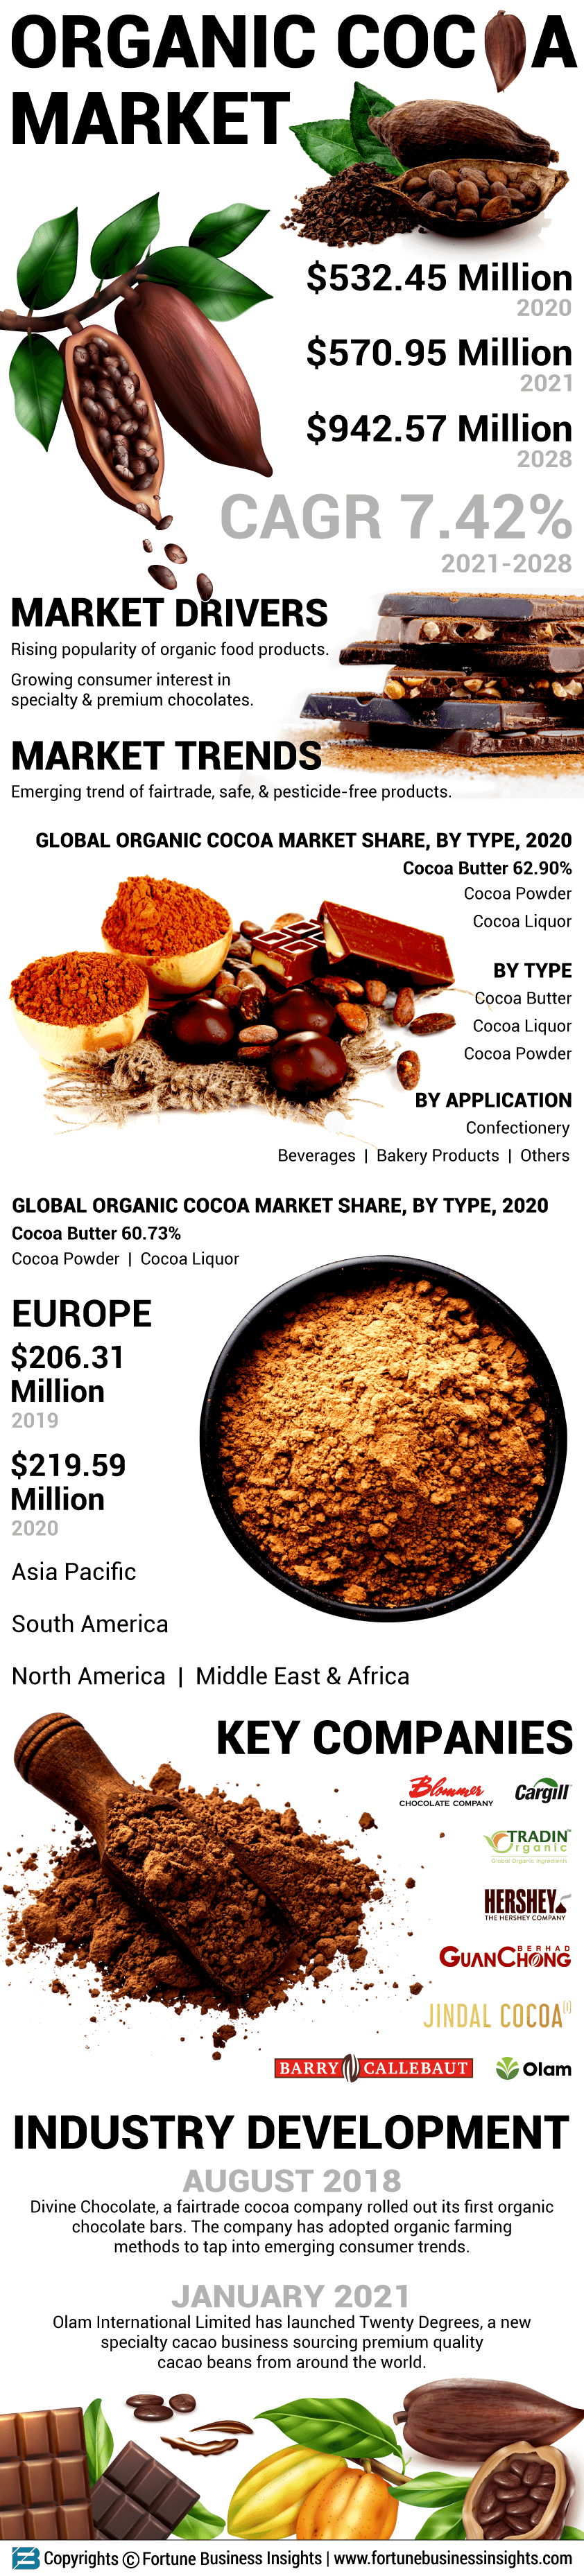 Organic Cocoa Market